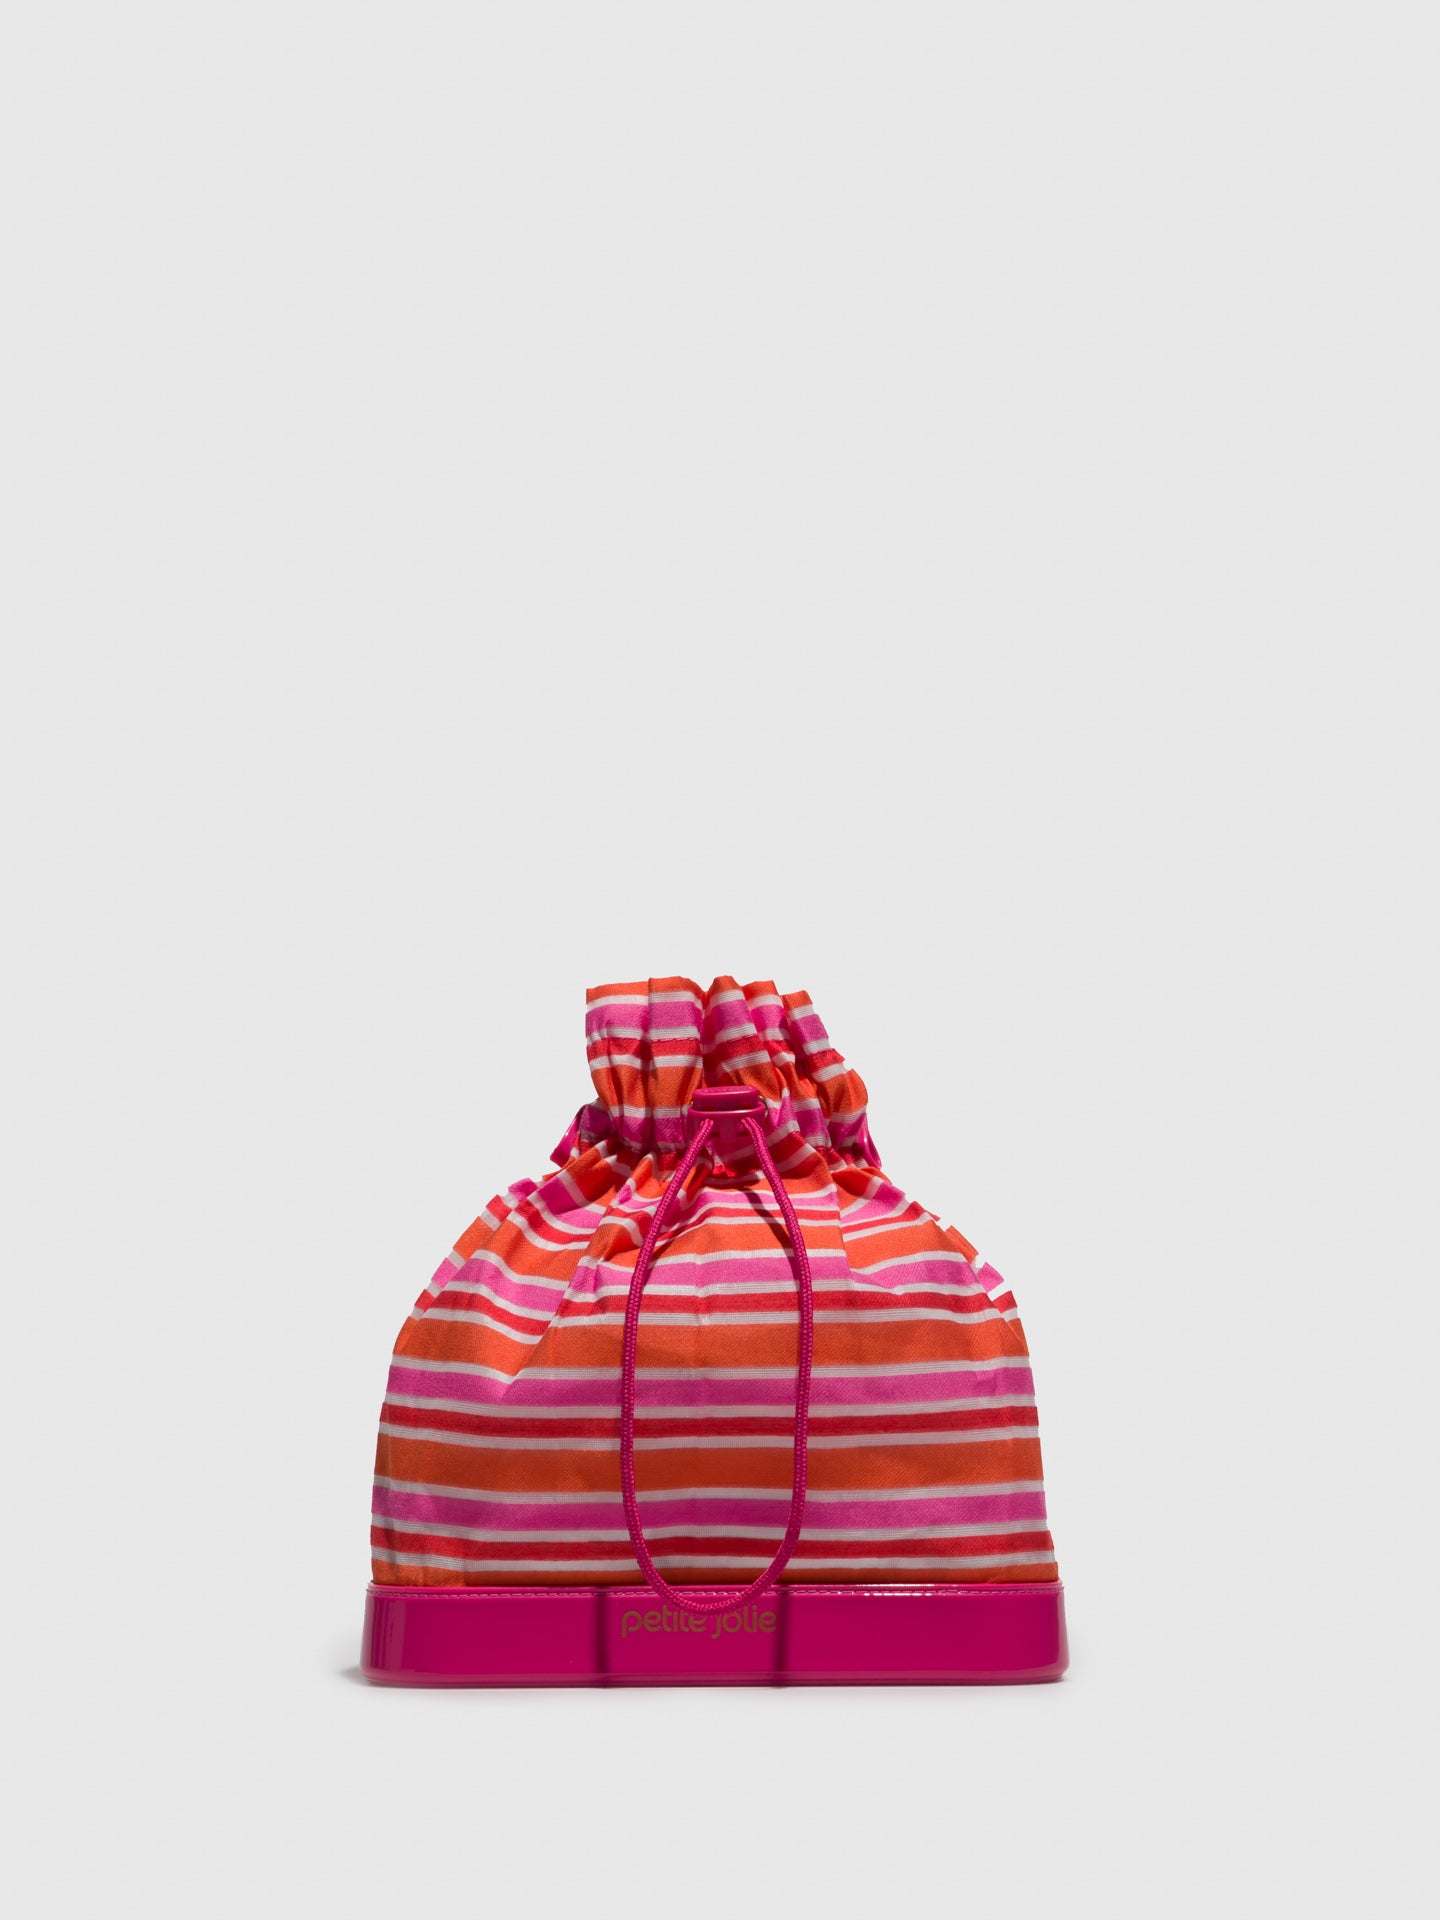 Petite Jolie By Parodi Pink Crossbody Bag